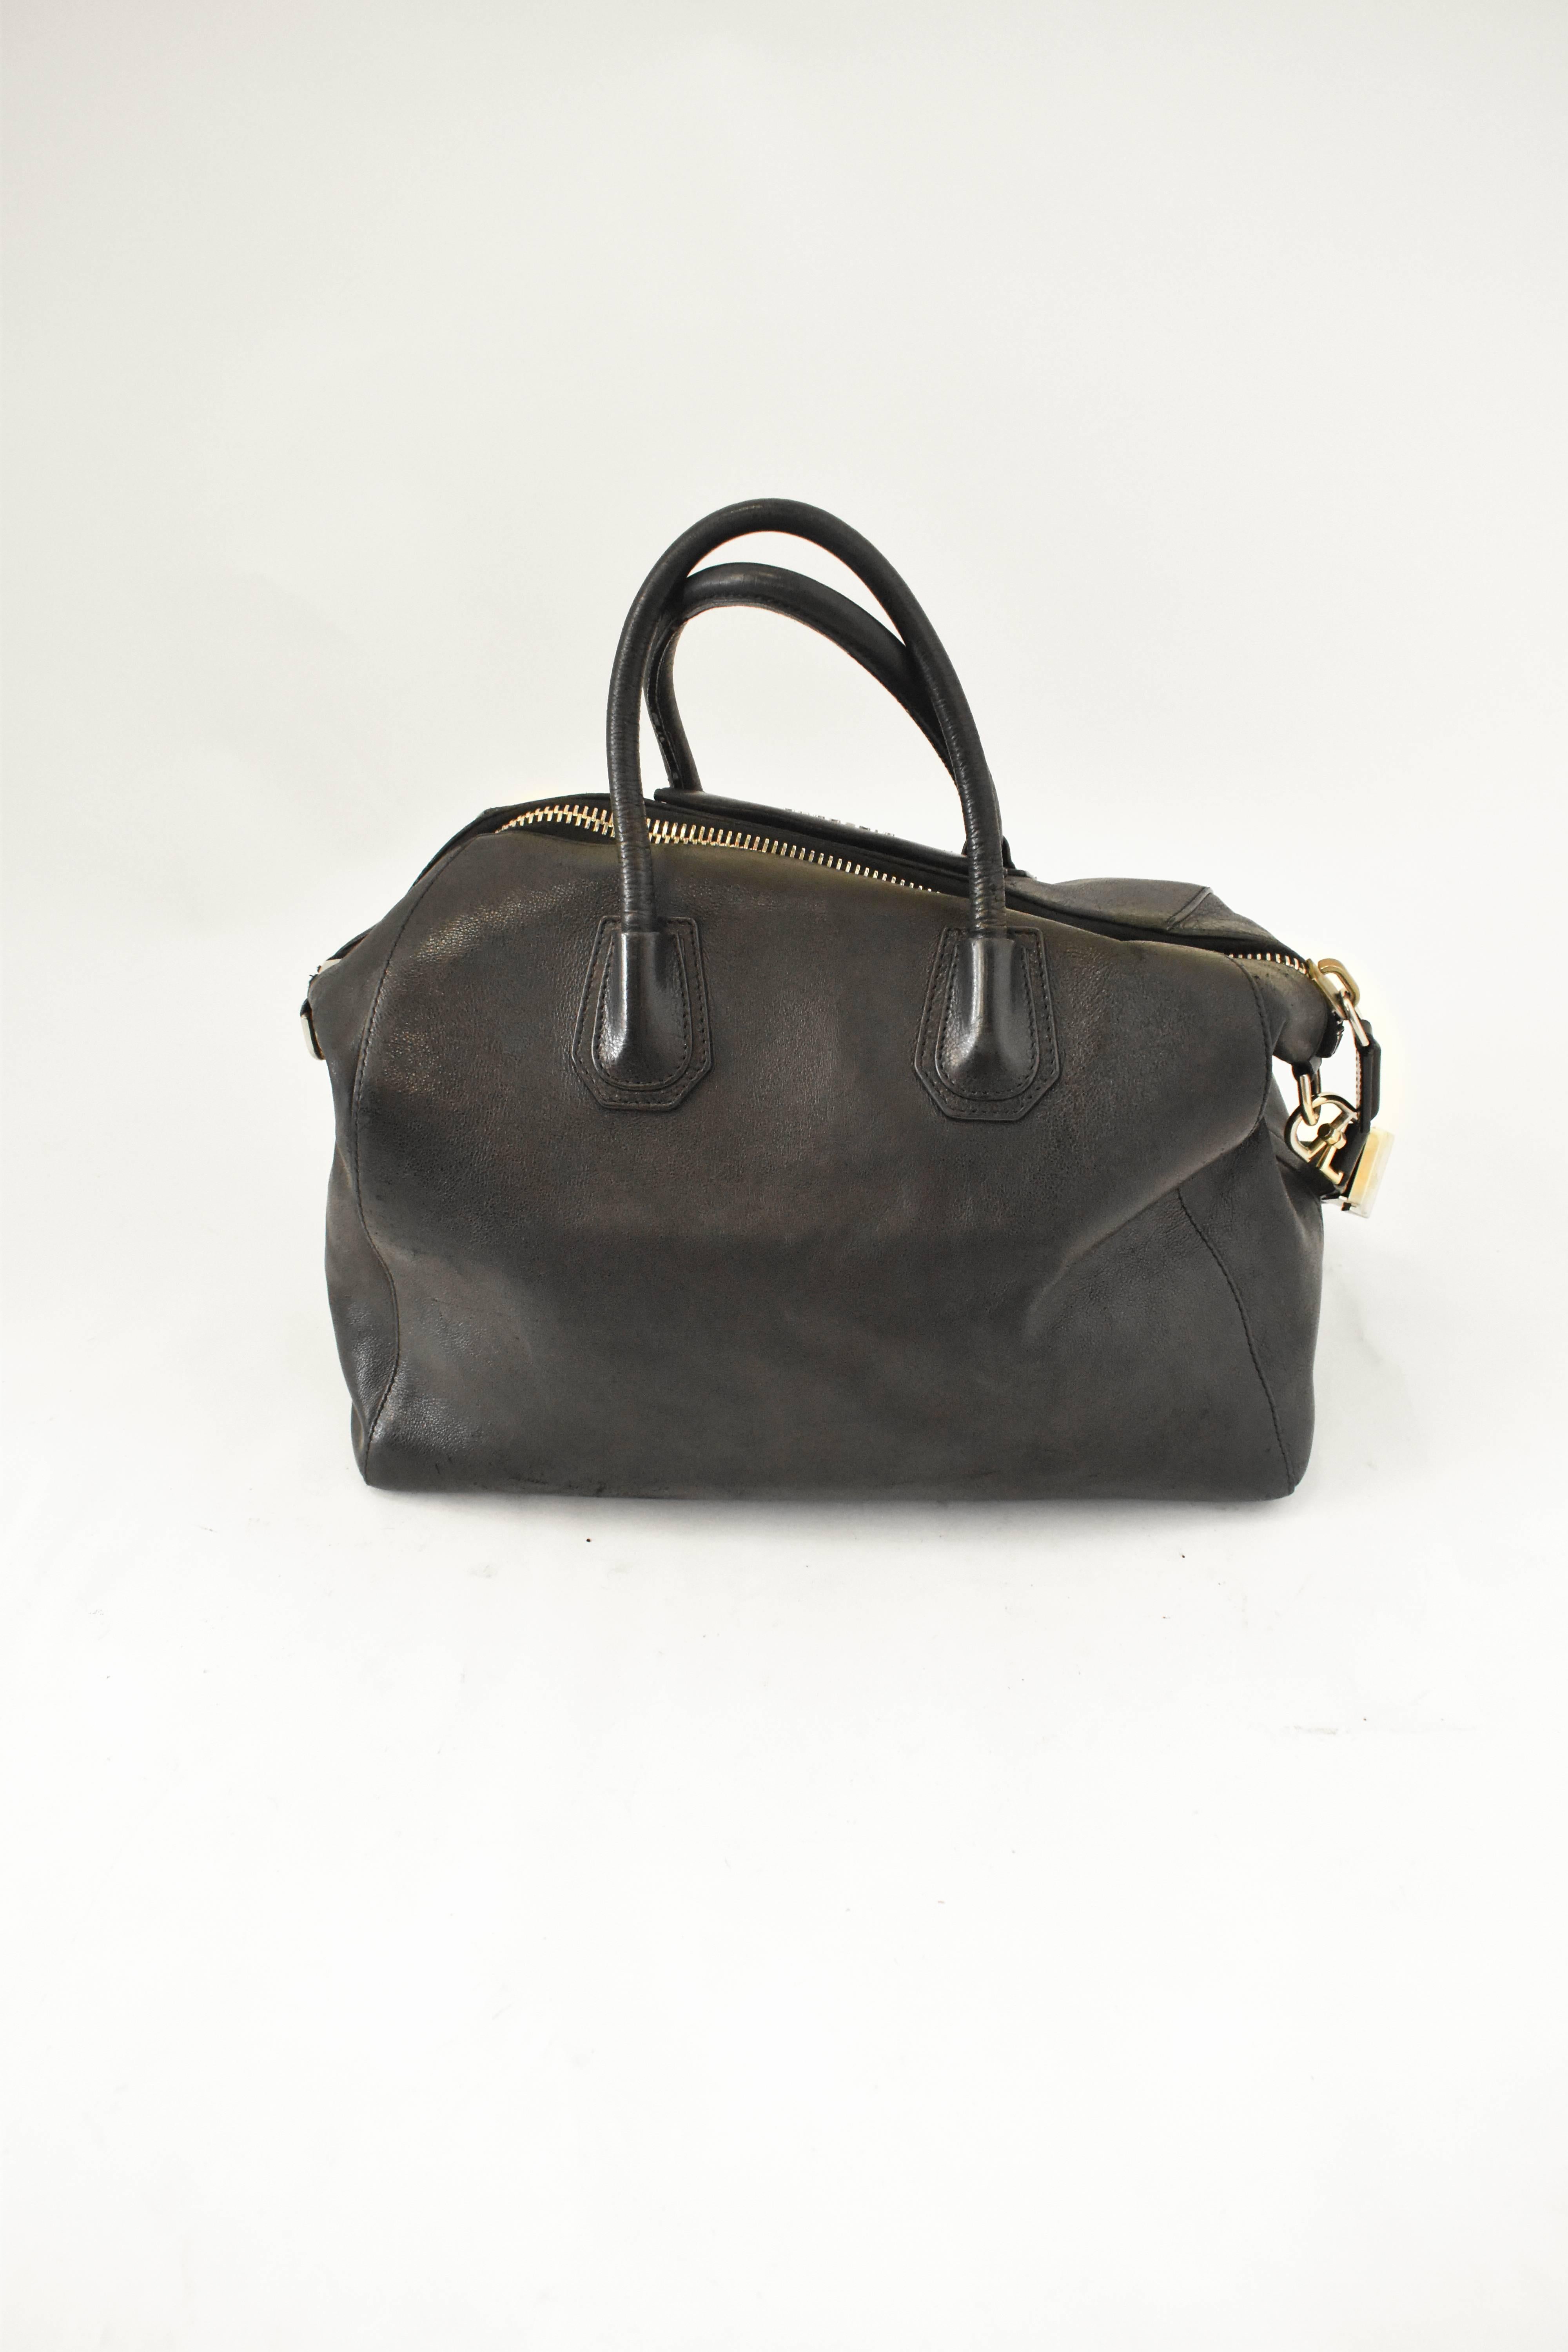 Women's Givenchy Antigona Black Leather Handbag